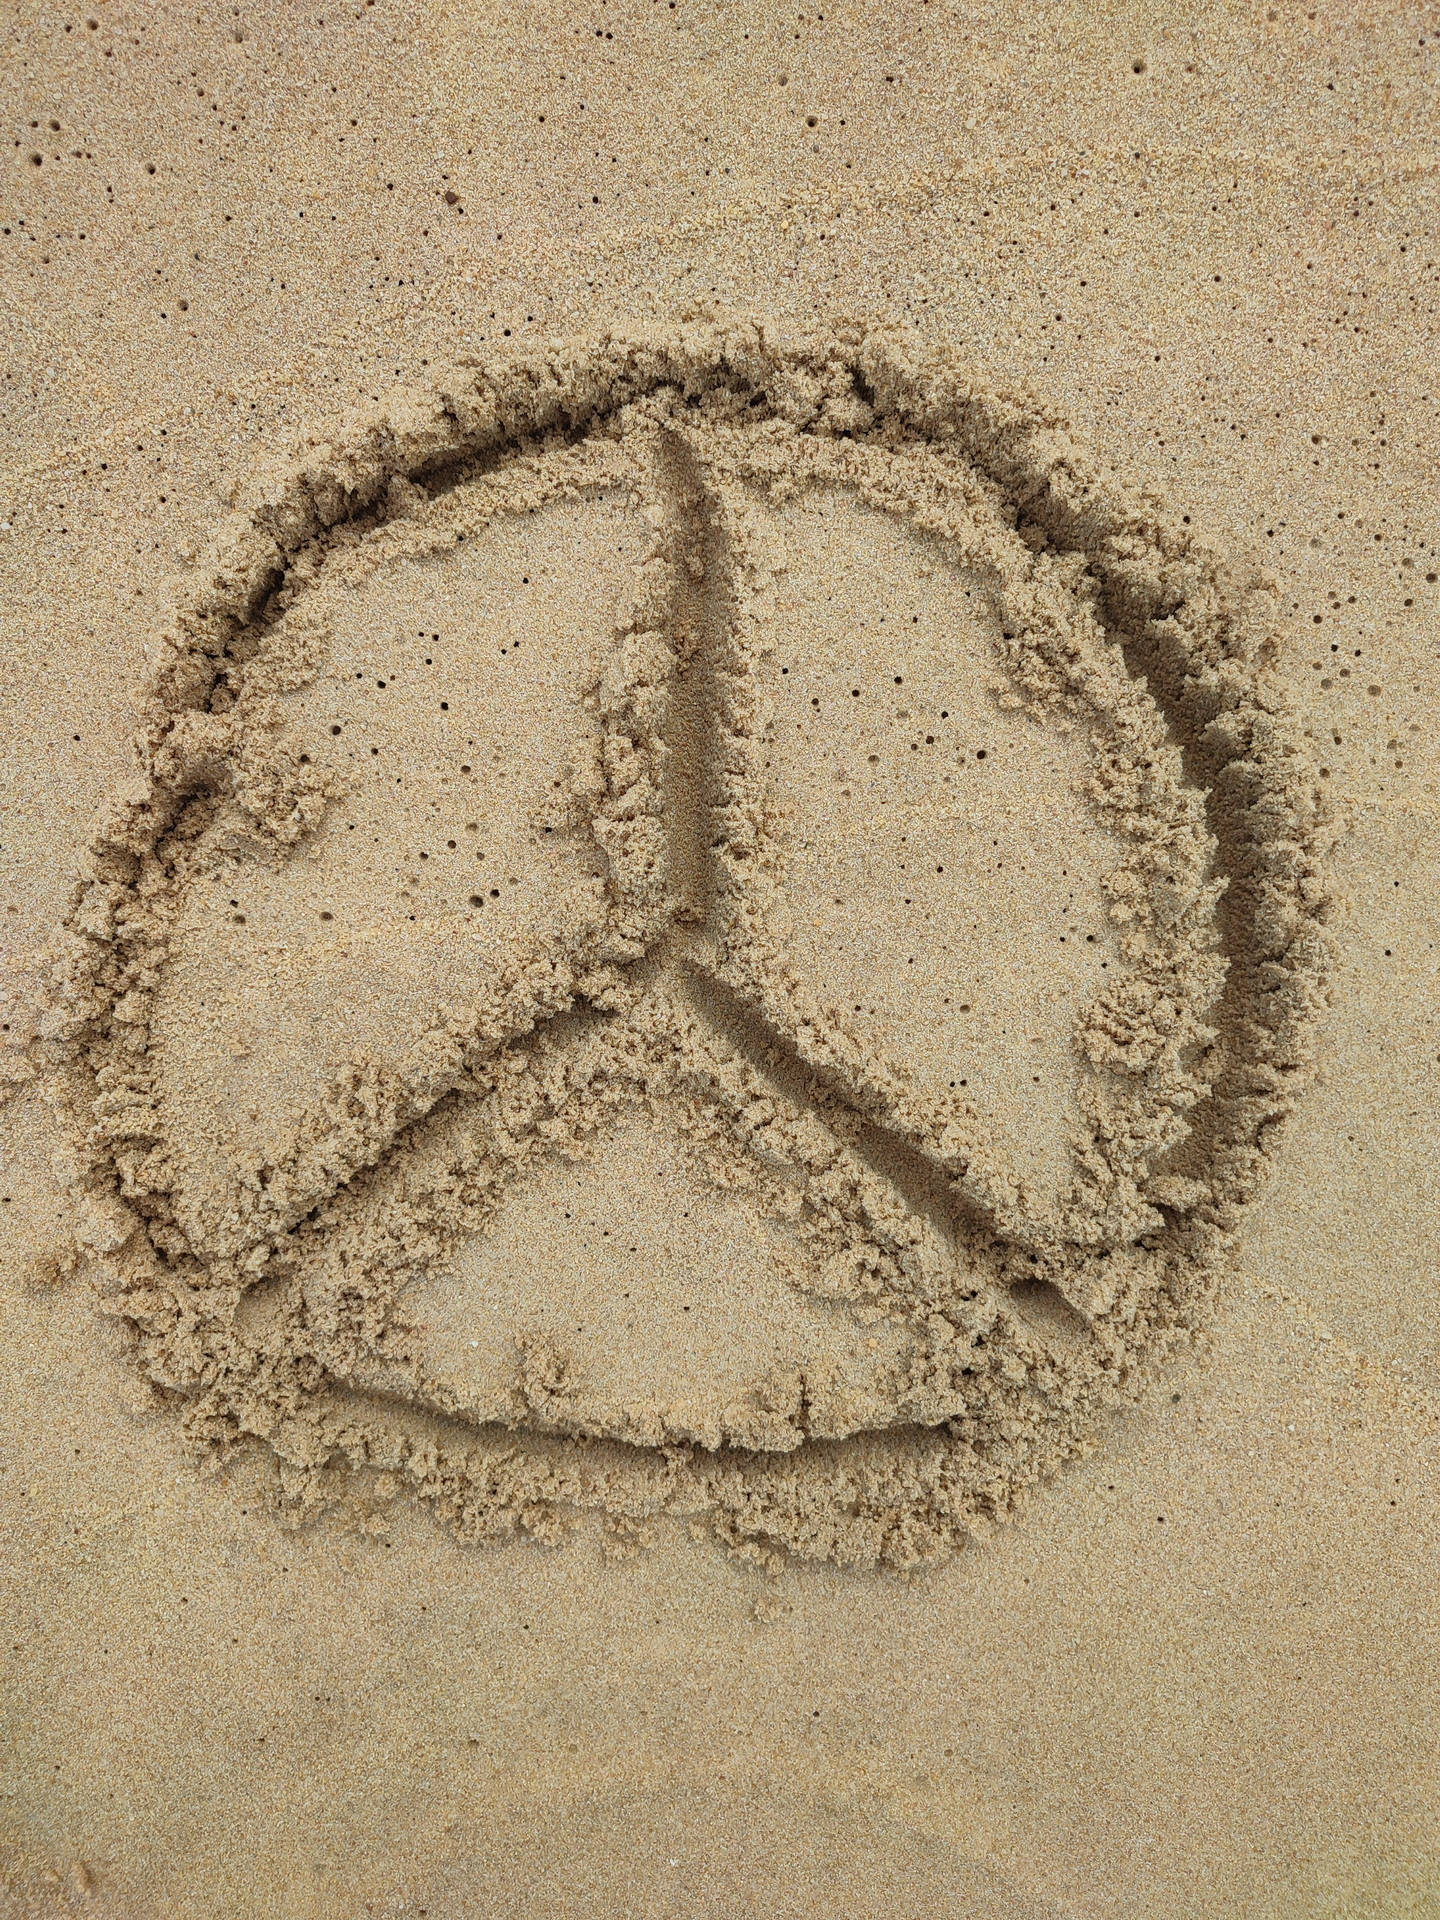 Peace Symbol Sand Drawing